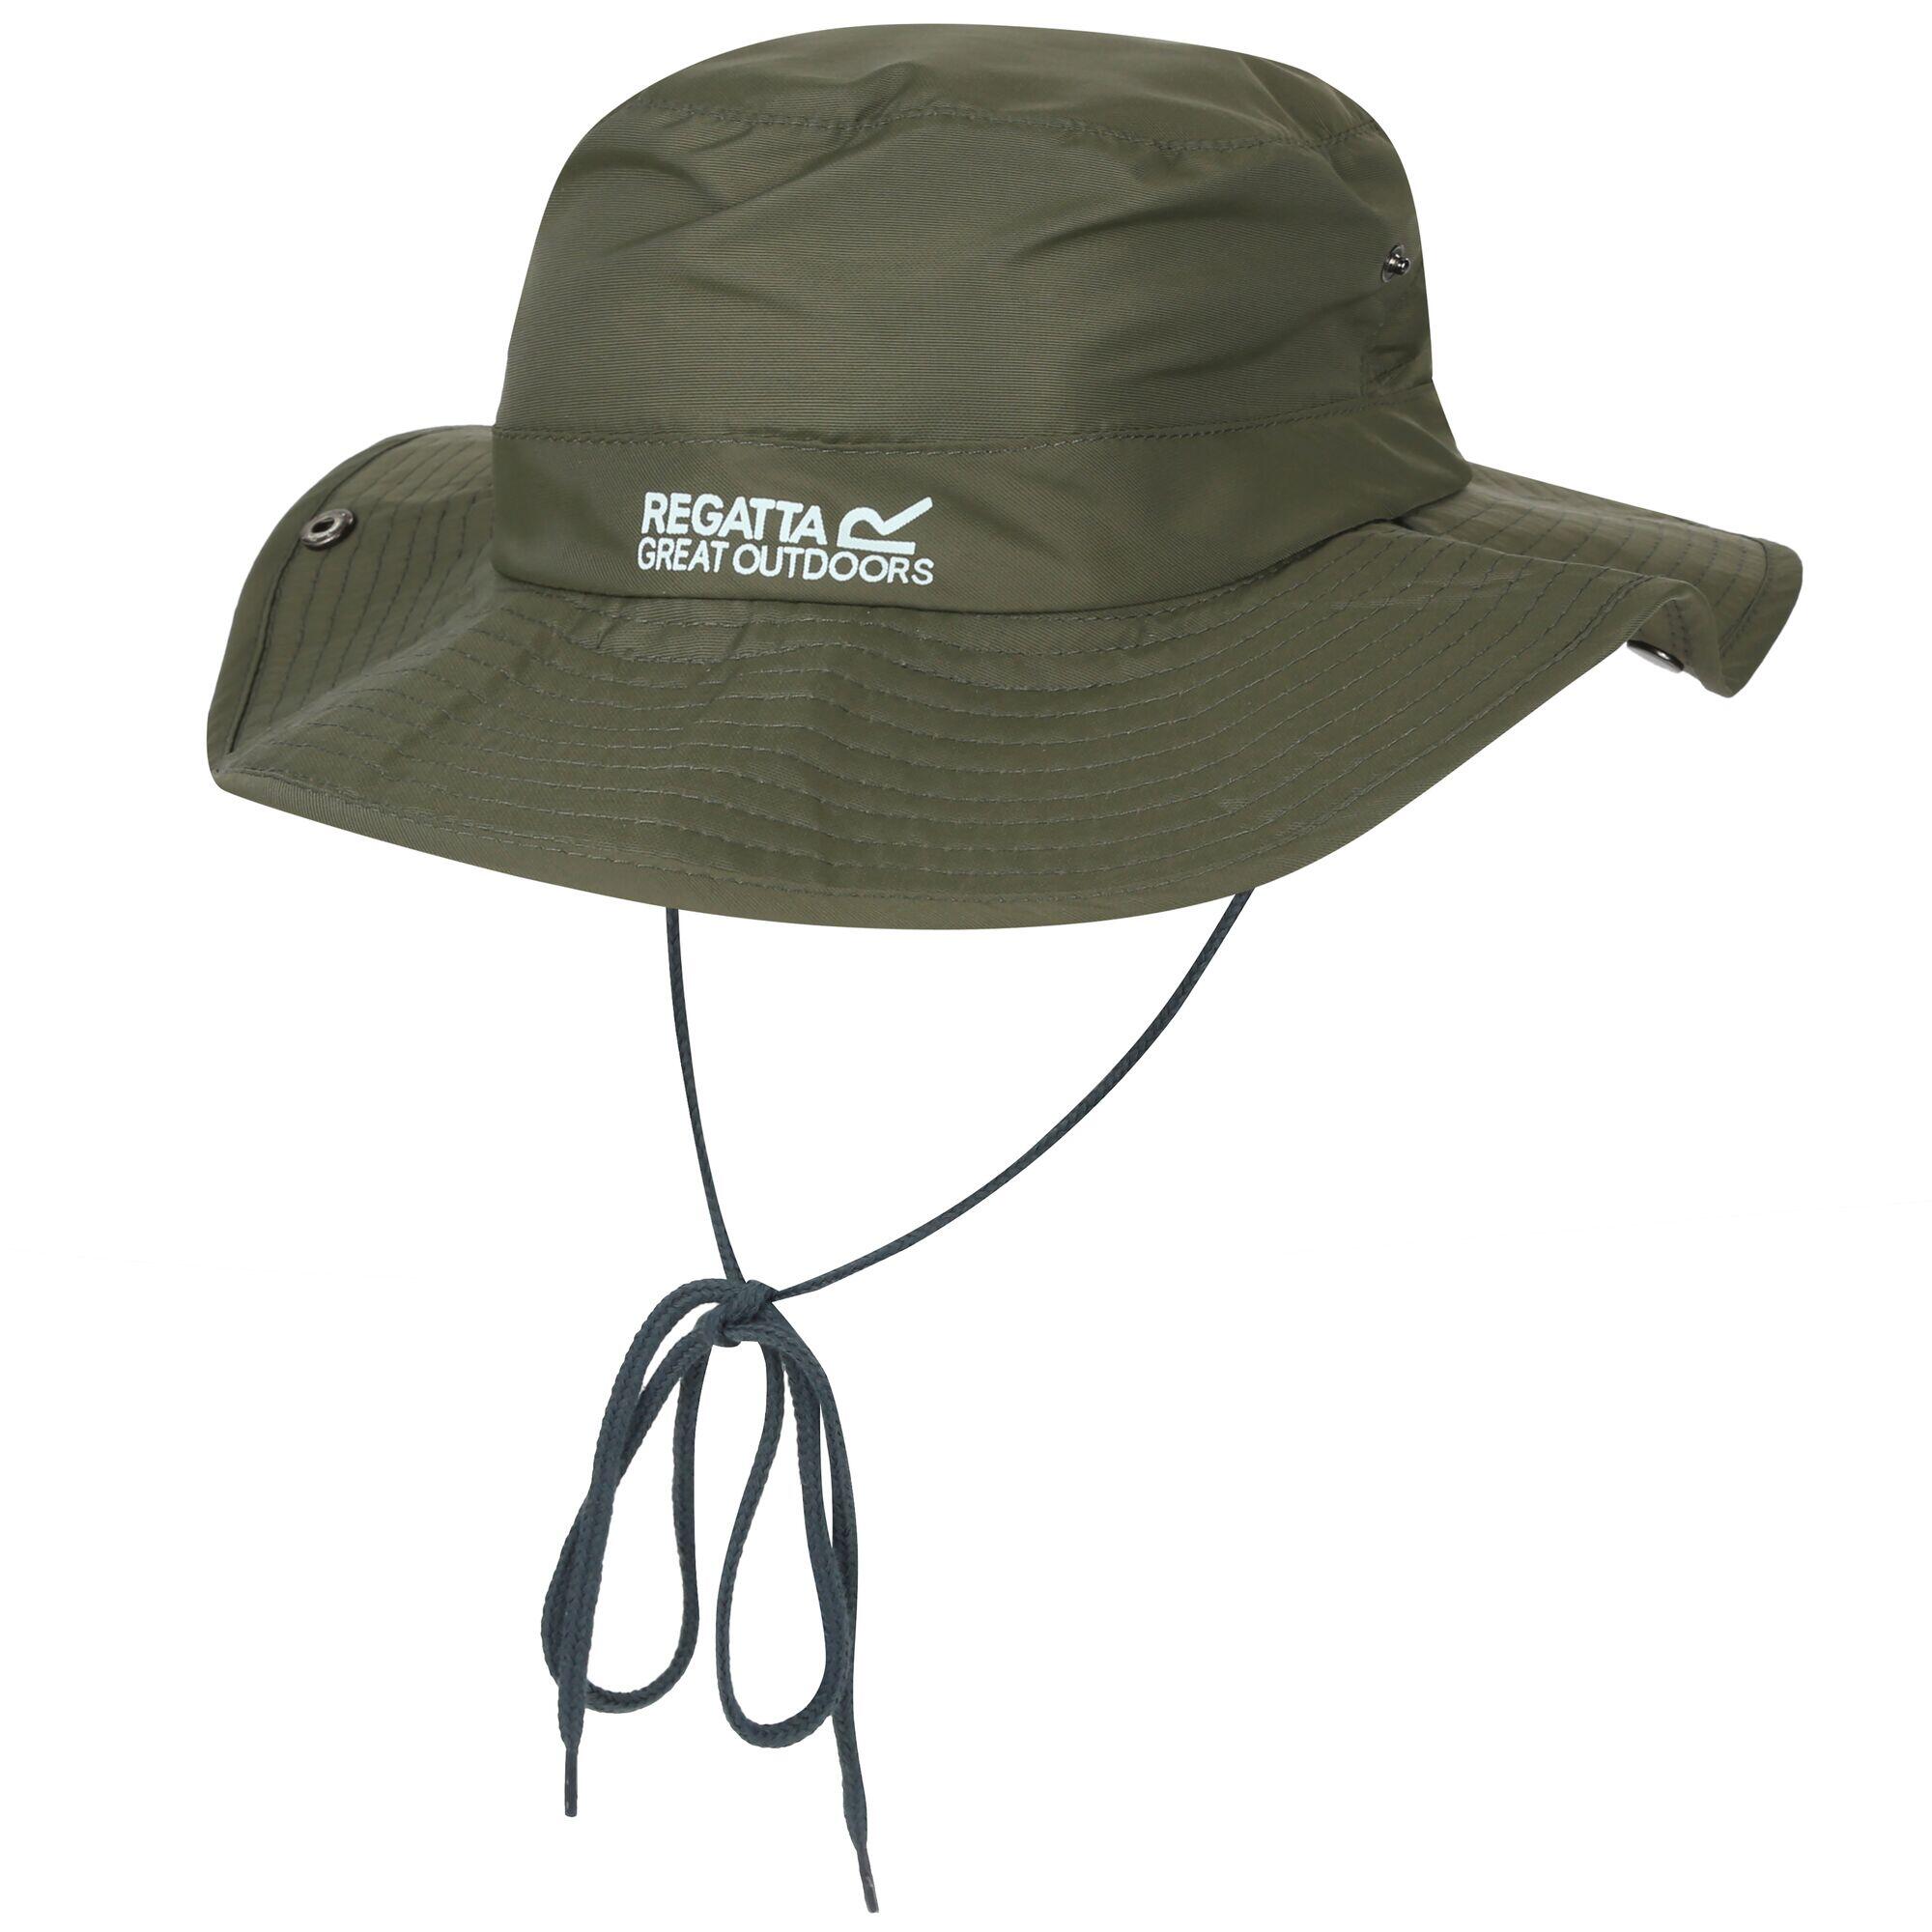 REGATTA Great Outdoors Unisex Adventure Tech Summer Sun Hiking Hat (Grape Leaf)